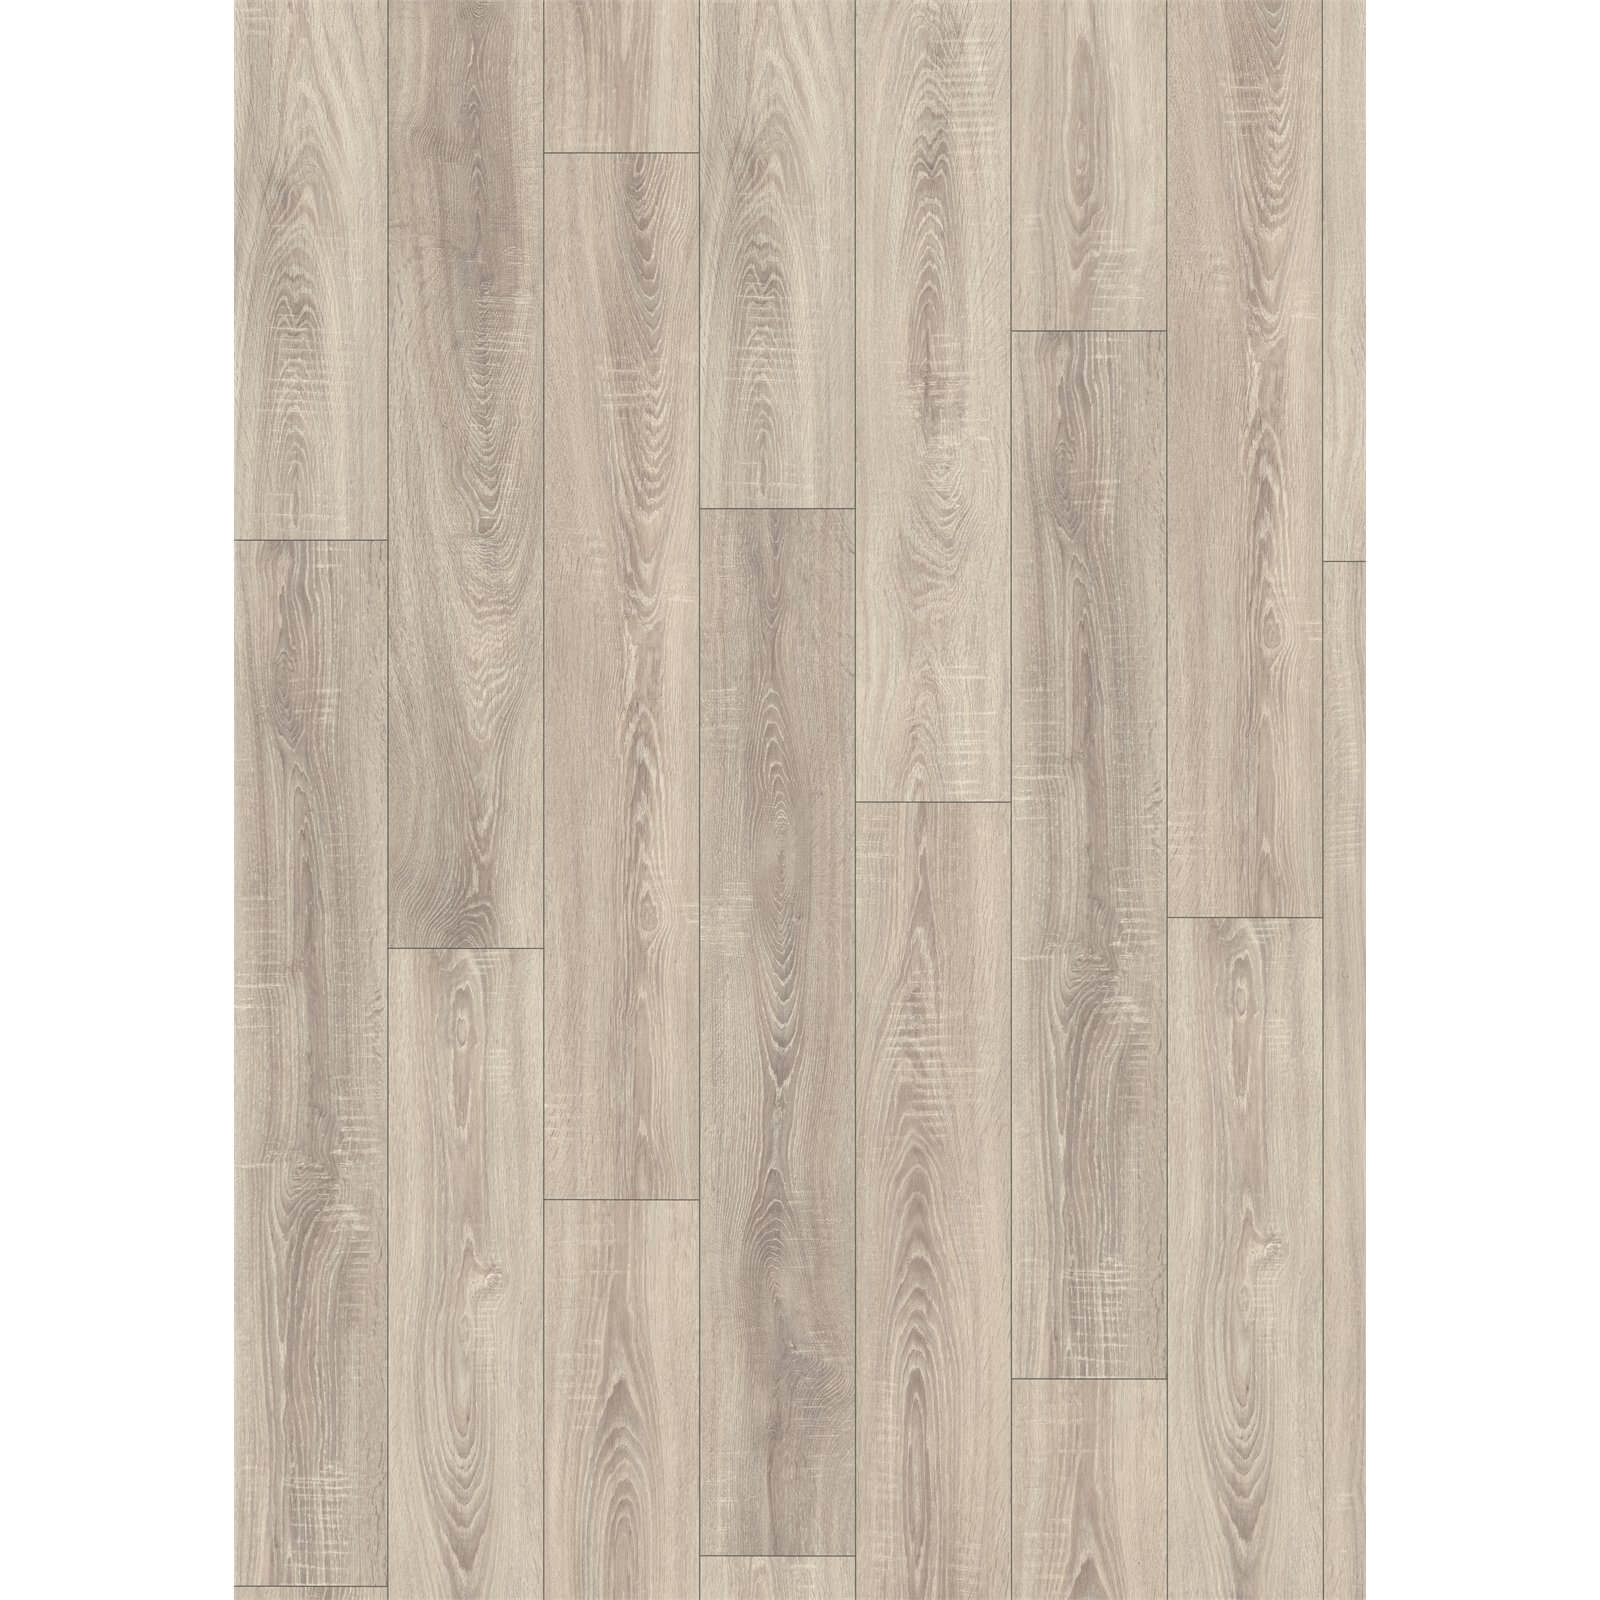 EGGER HOME Toscolano Oak light 12mm Laminate Flooring - 1.49 sqm Pack